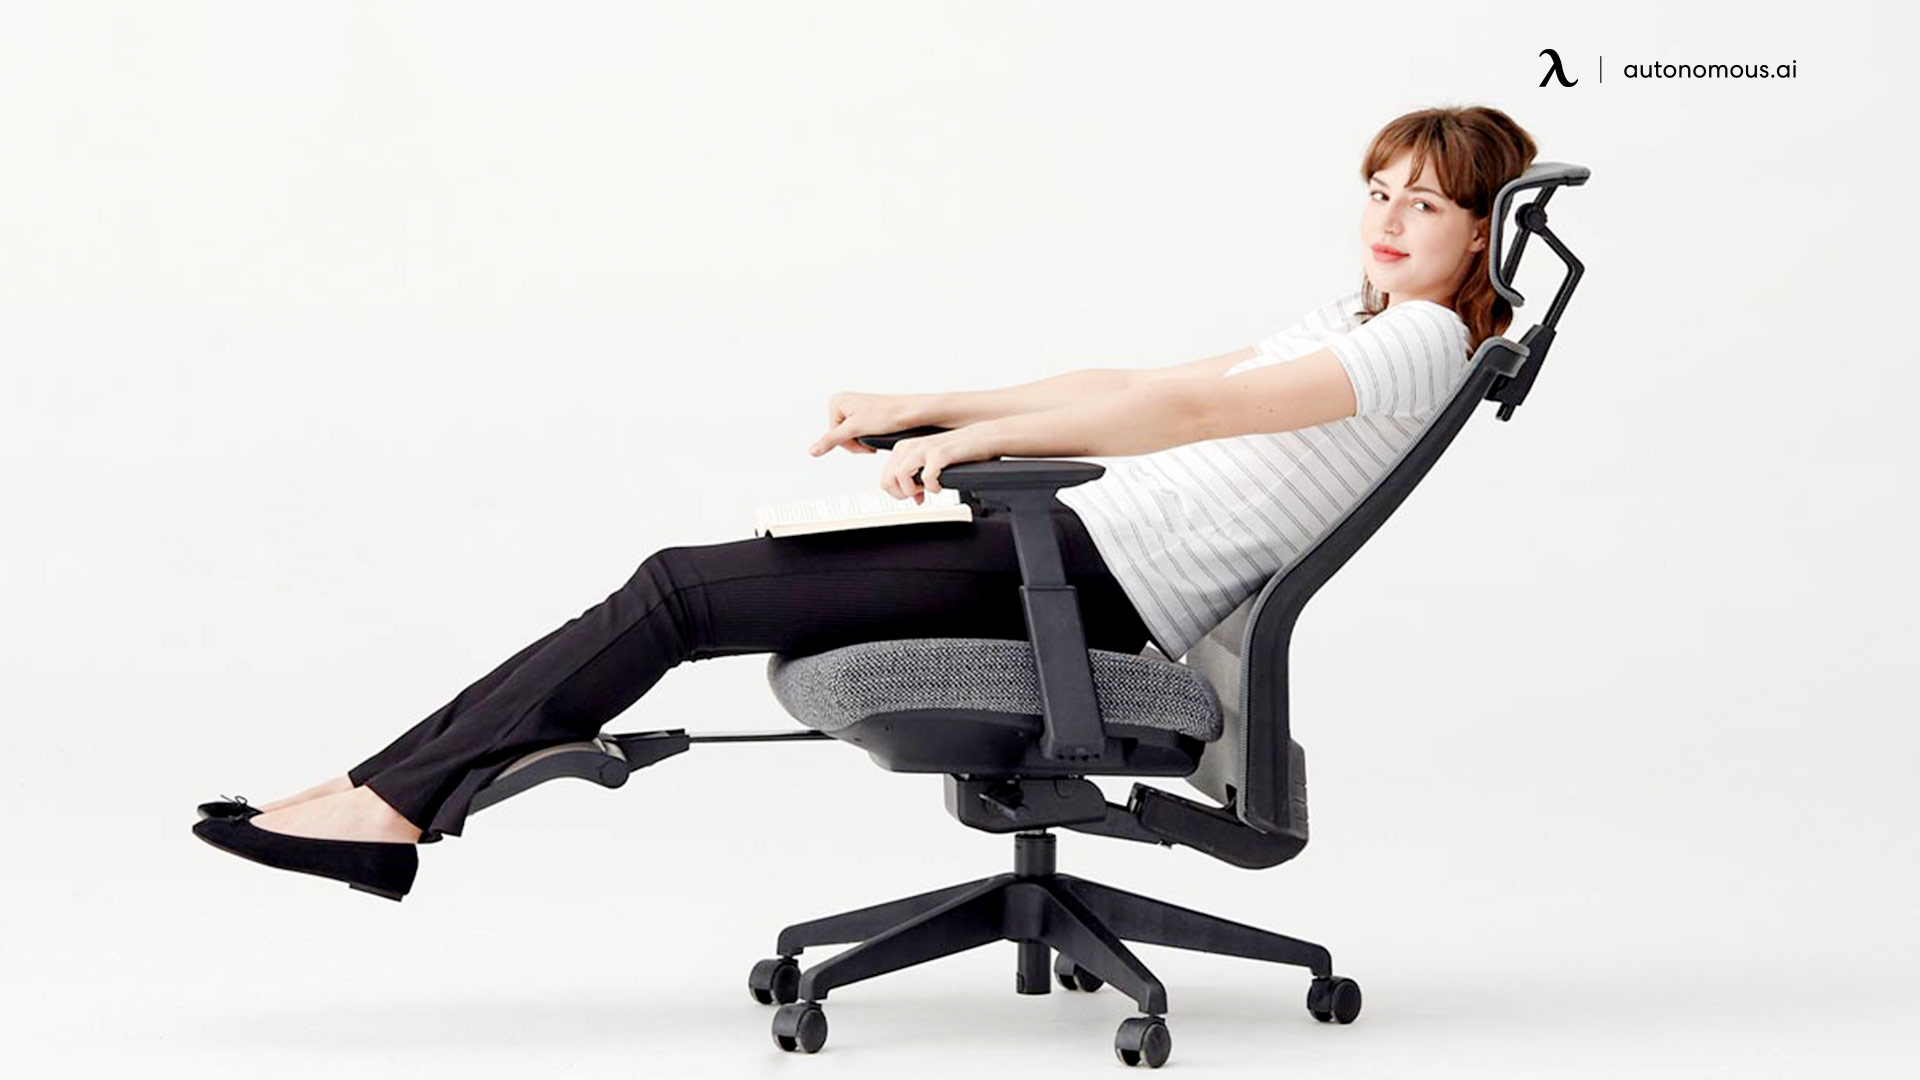 ergonomic chair kicks slouching in chair